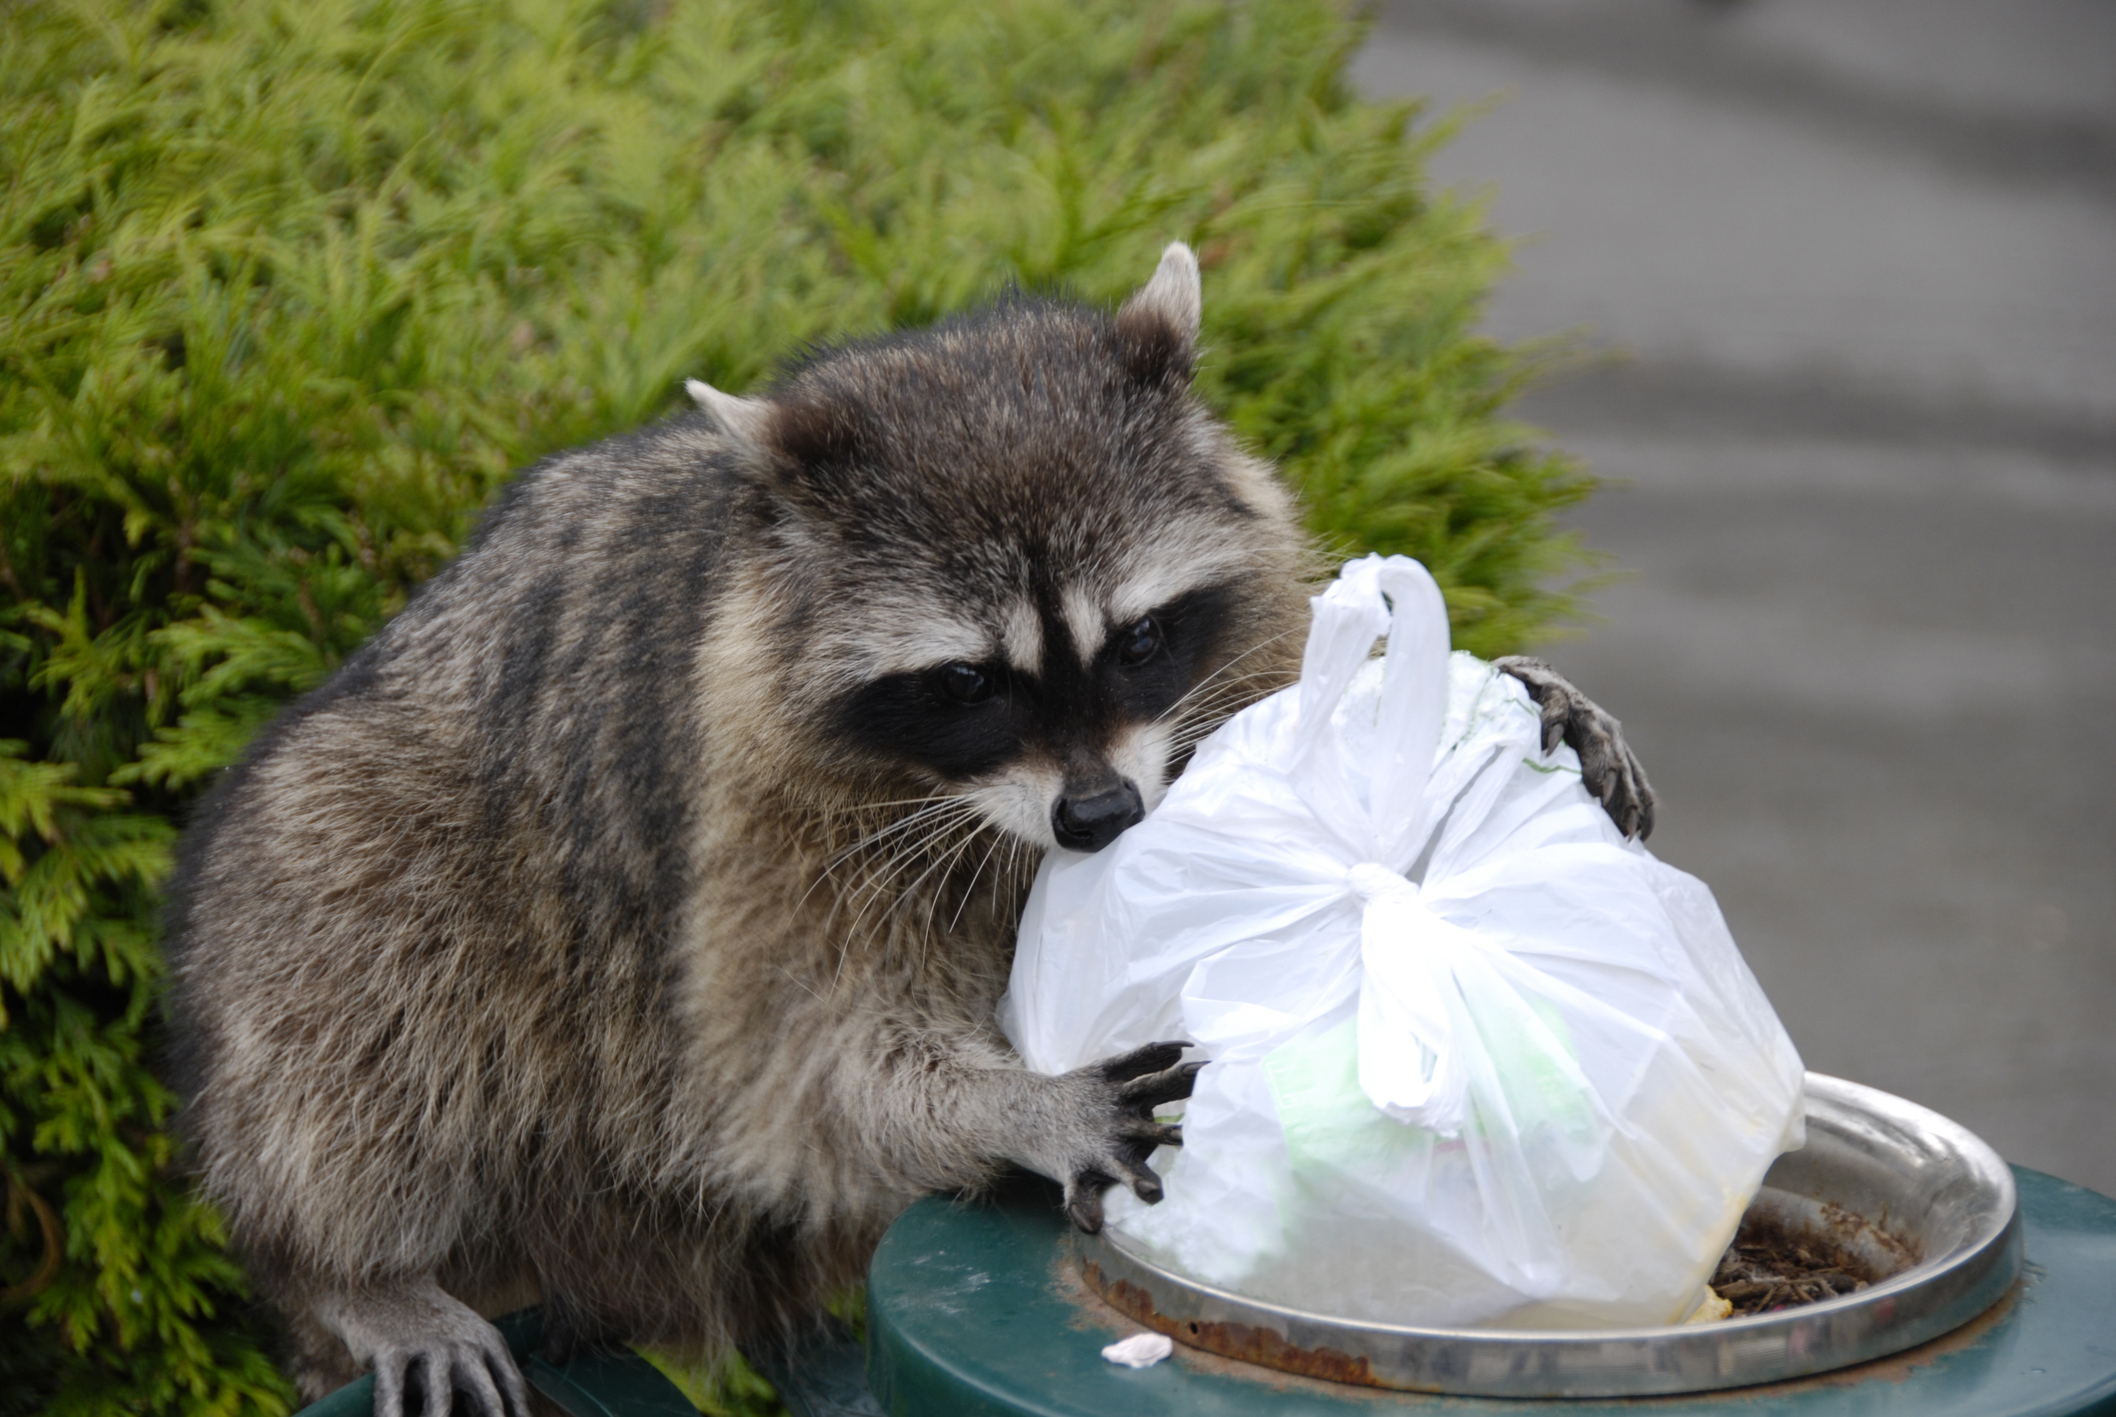 A raccoon getting rubbish from a bin 